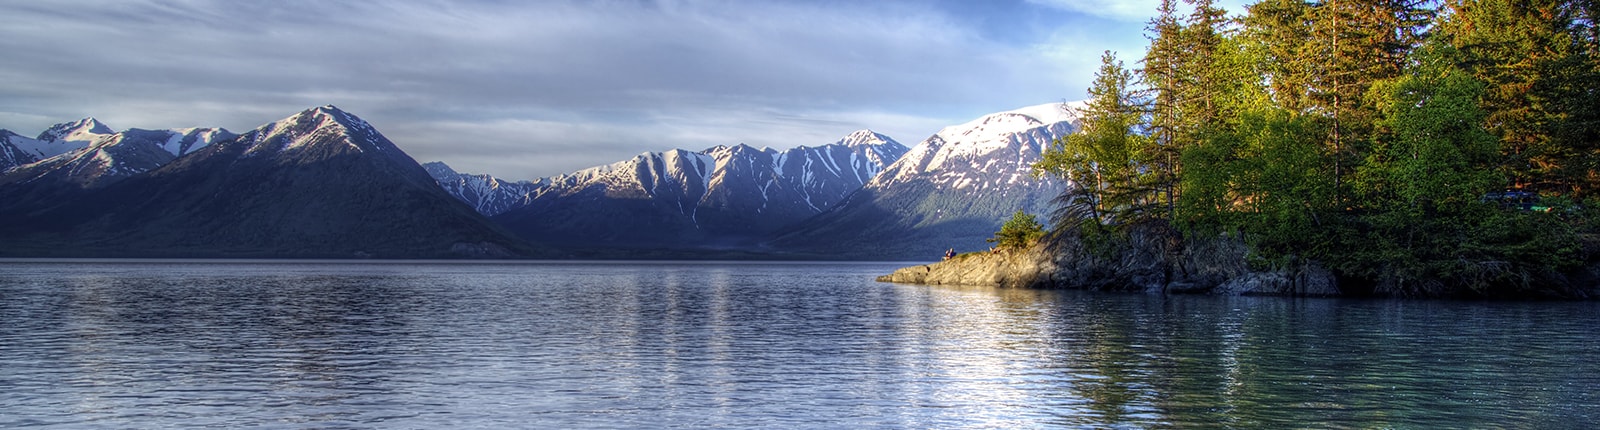 Scenic mountain views in Juneau Alaska